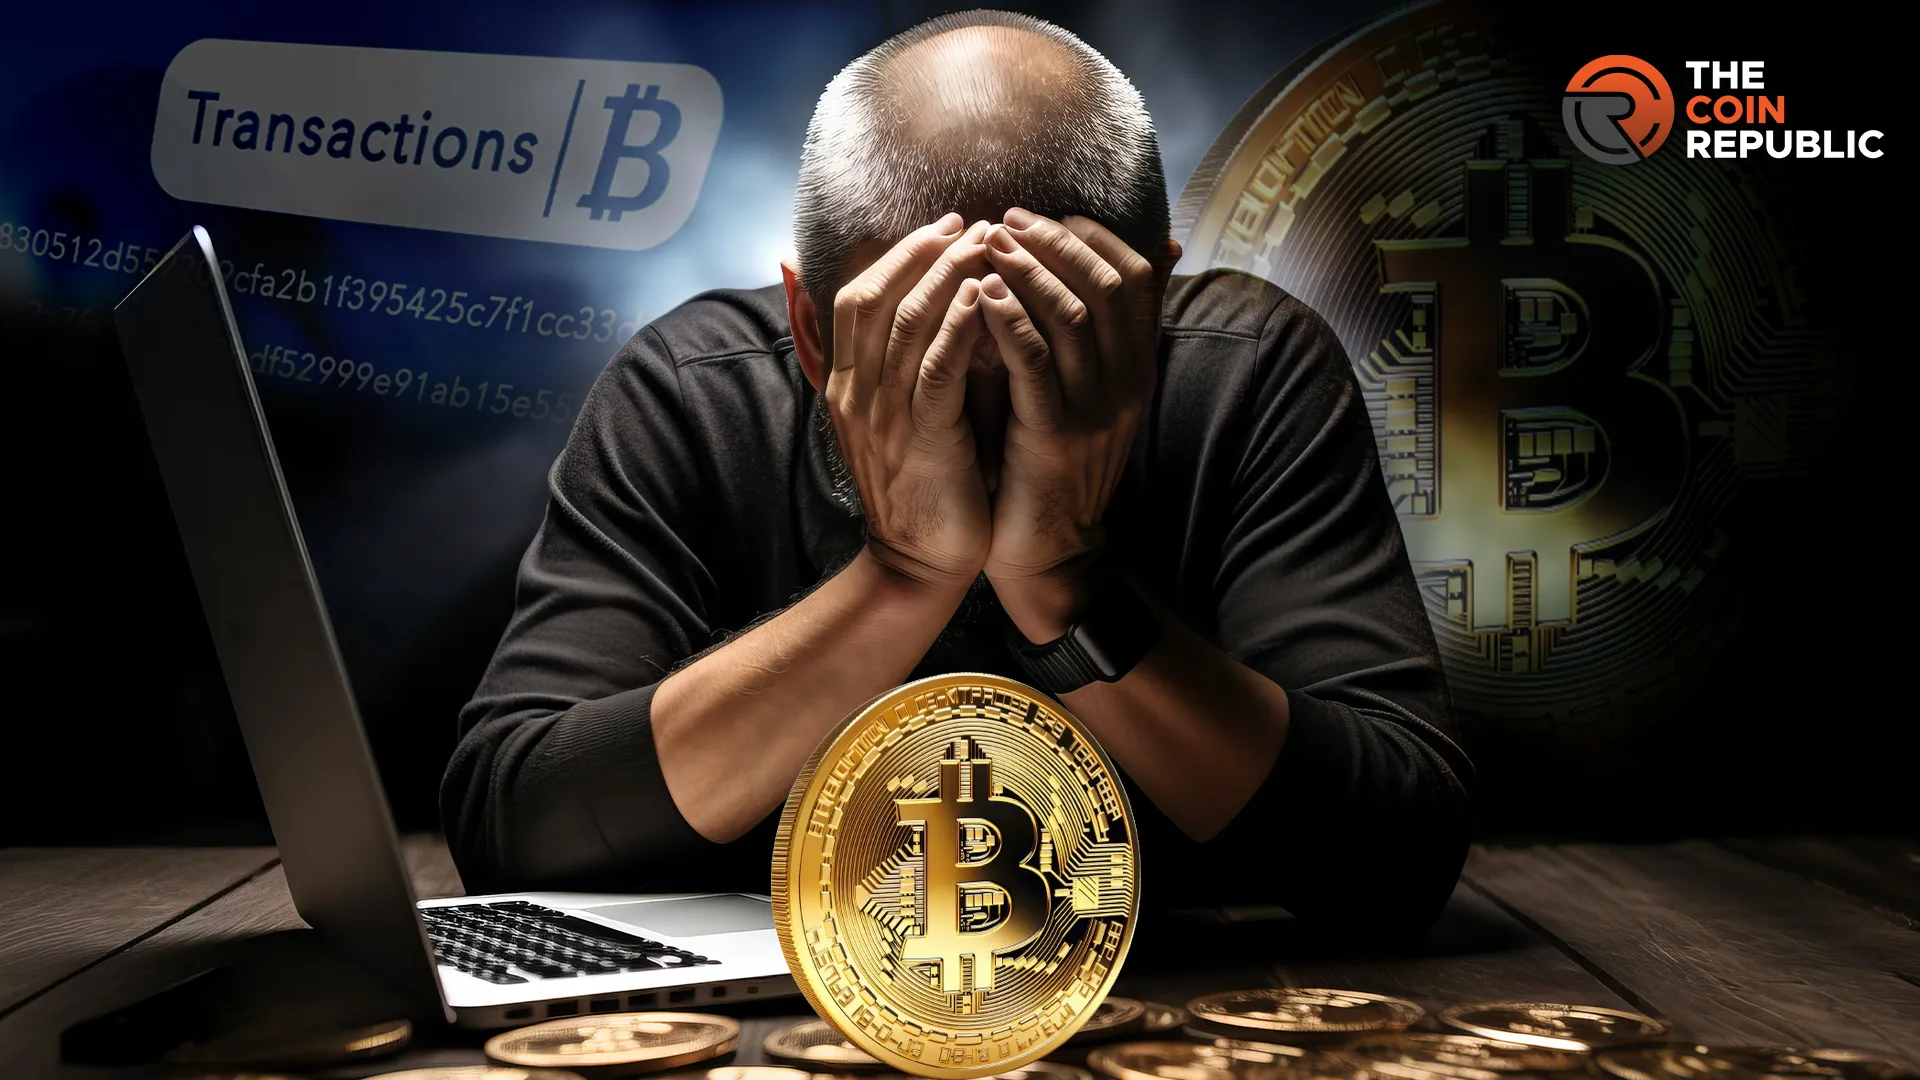 Critics: Bitcoin Transaction Fee Hits $128, Raising Concerns